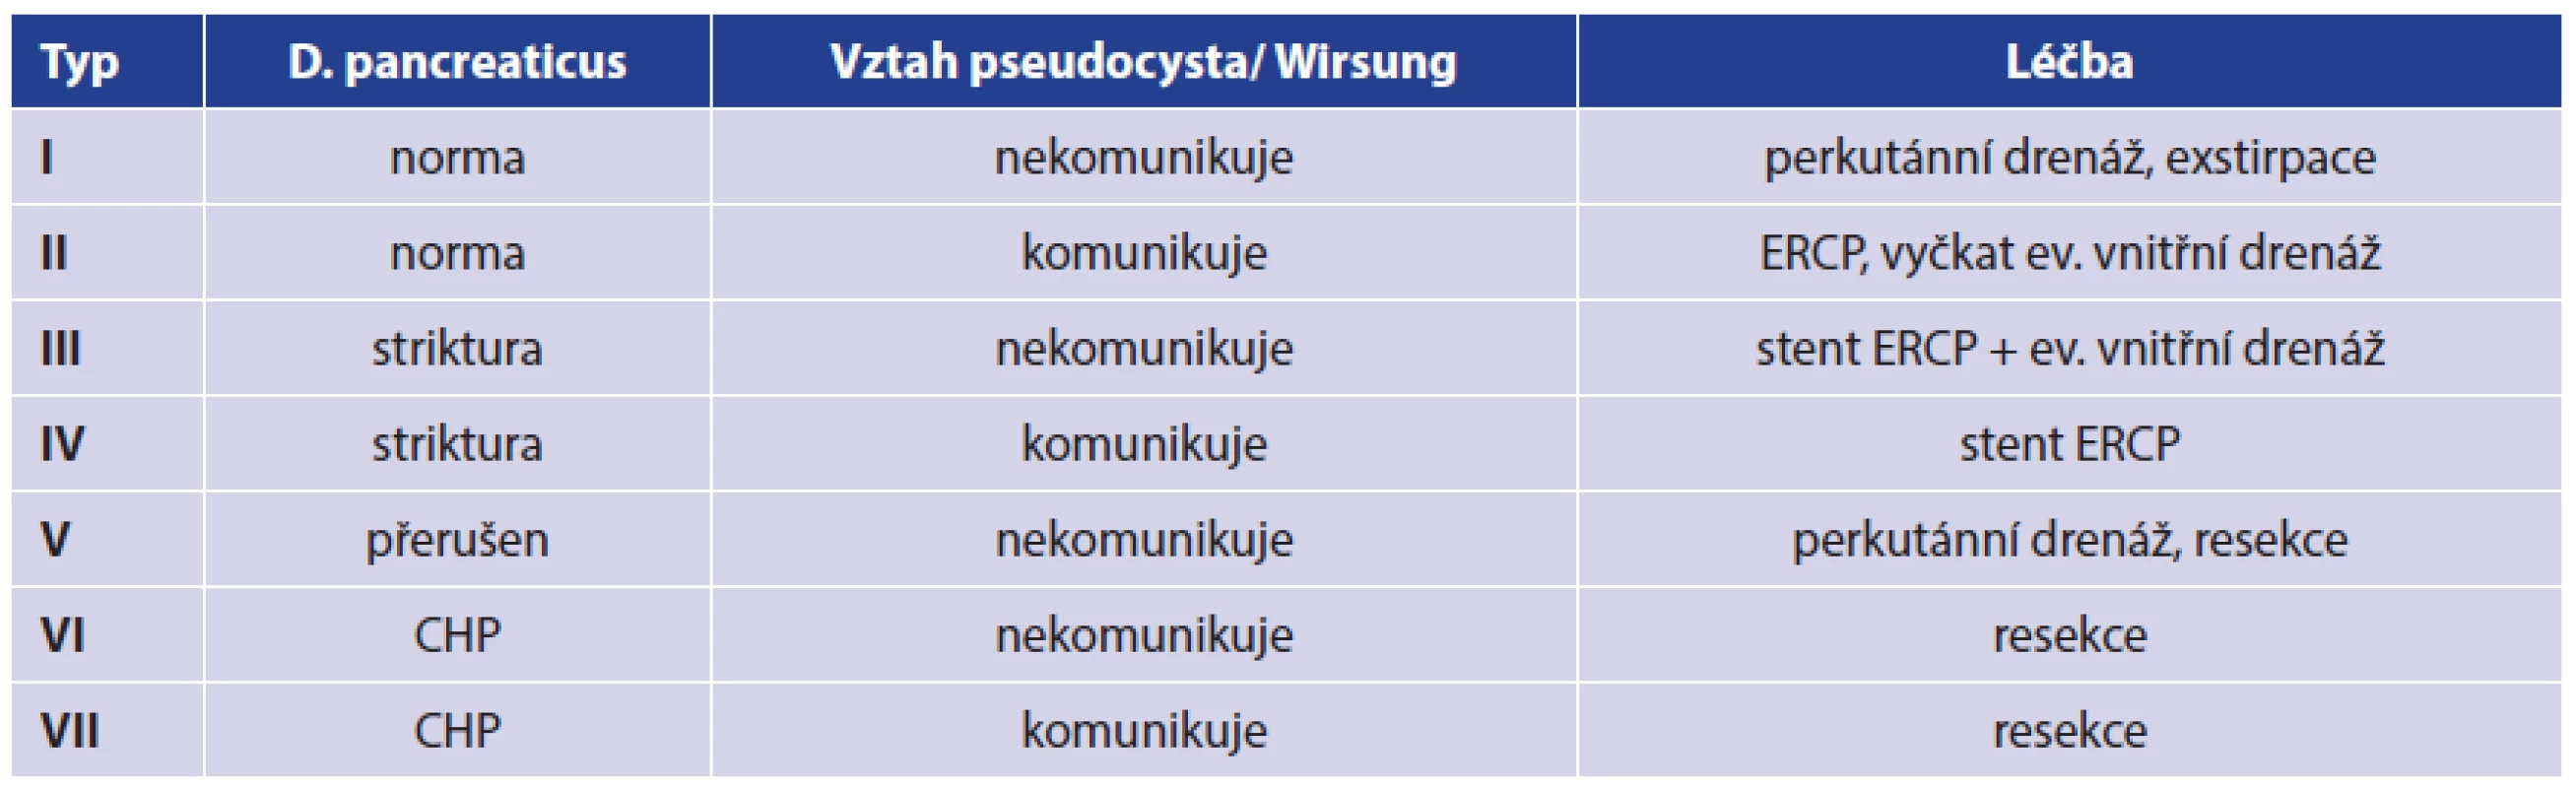 Klasifikace pseudocyst a léčby upravená dle WH Nealona
Tab. 1. Pseudocyst and therapy classification adapted according to WH Nealon